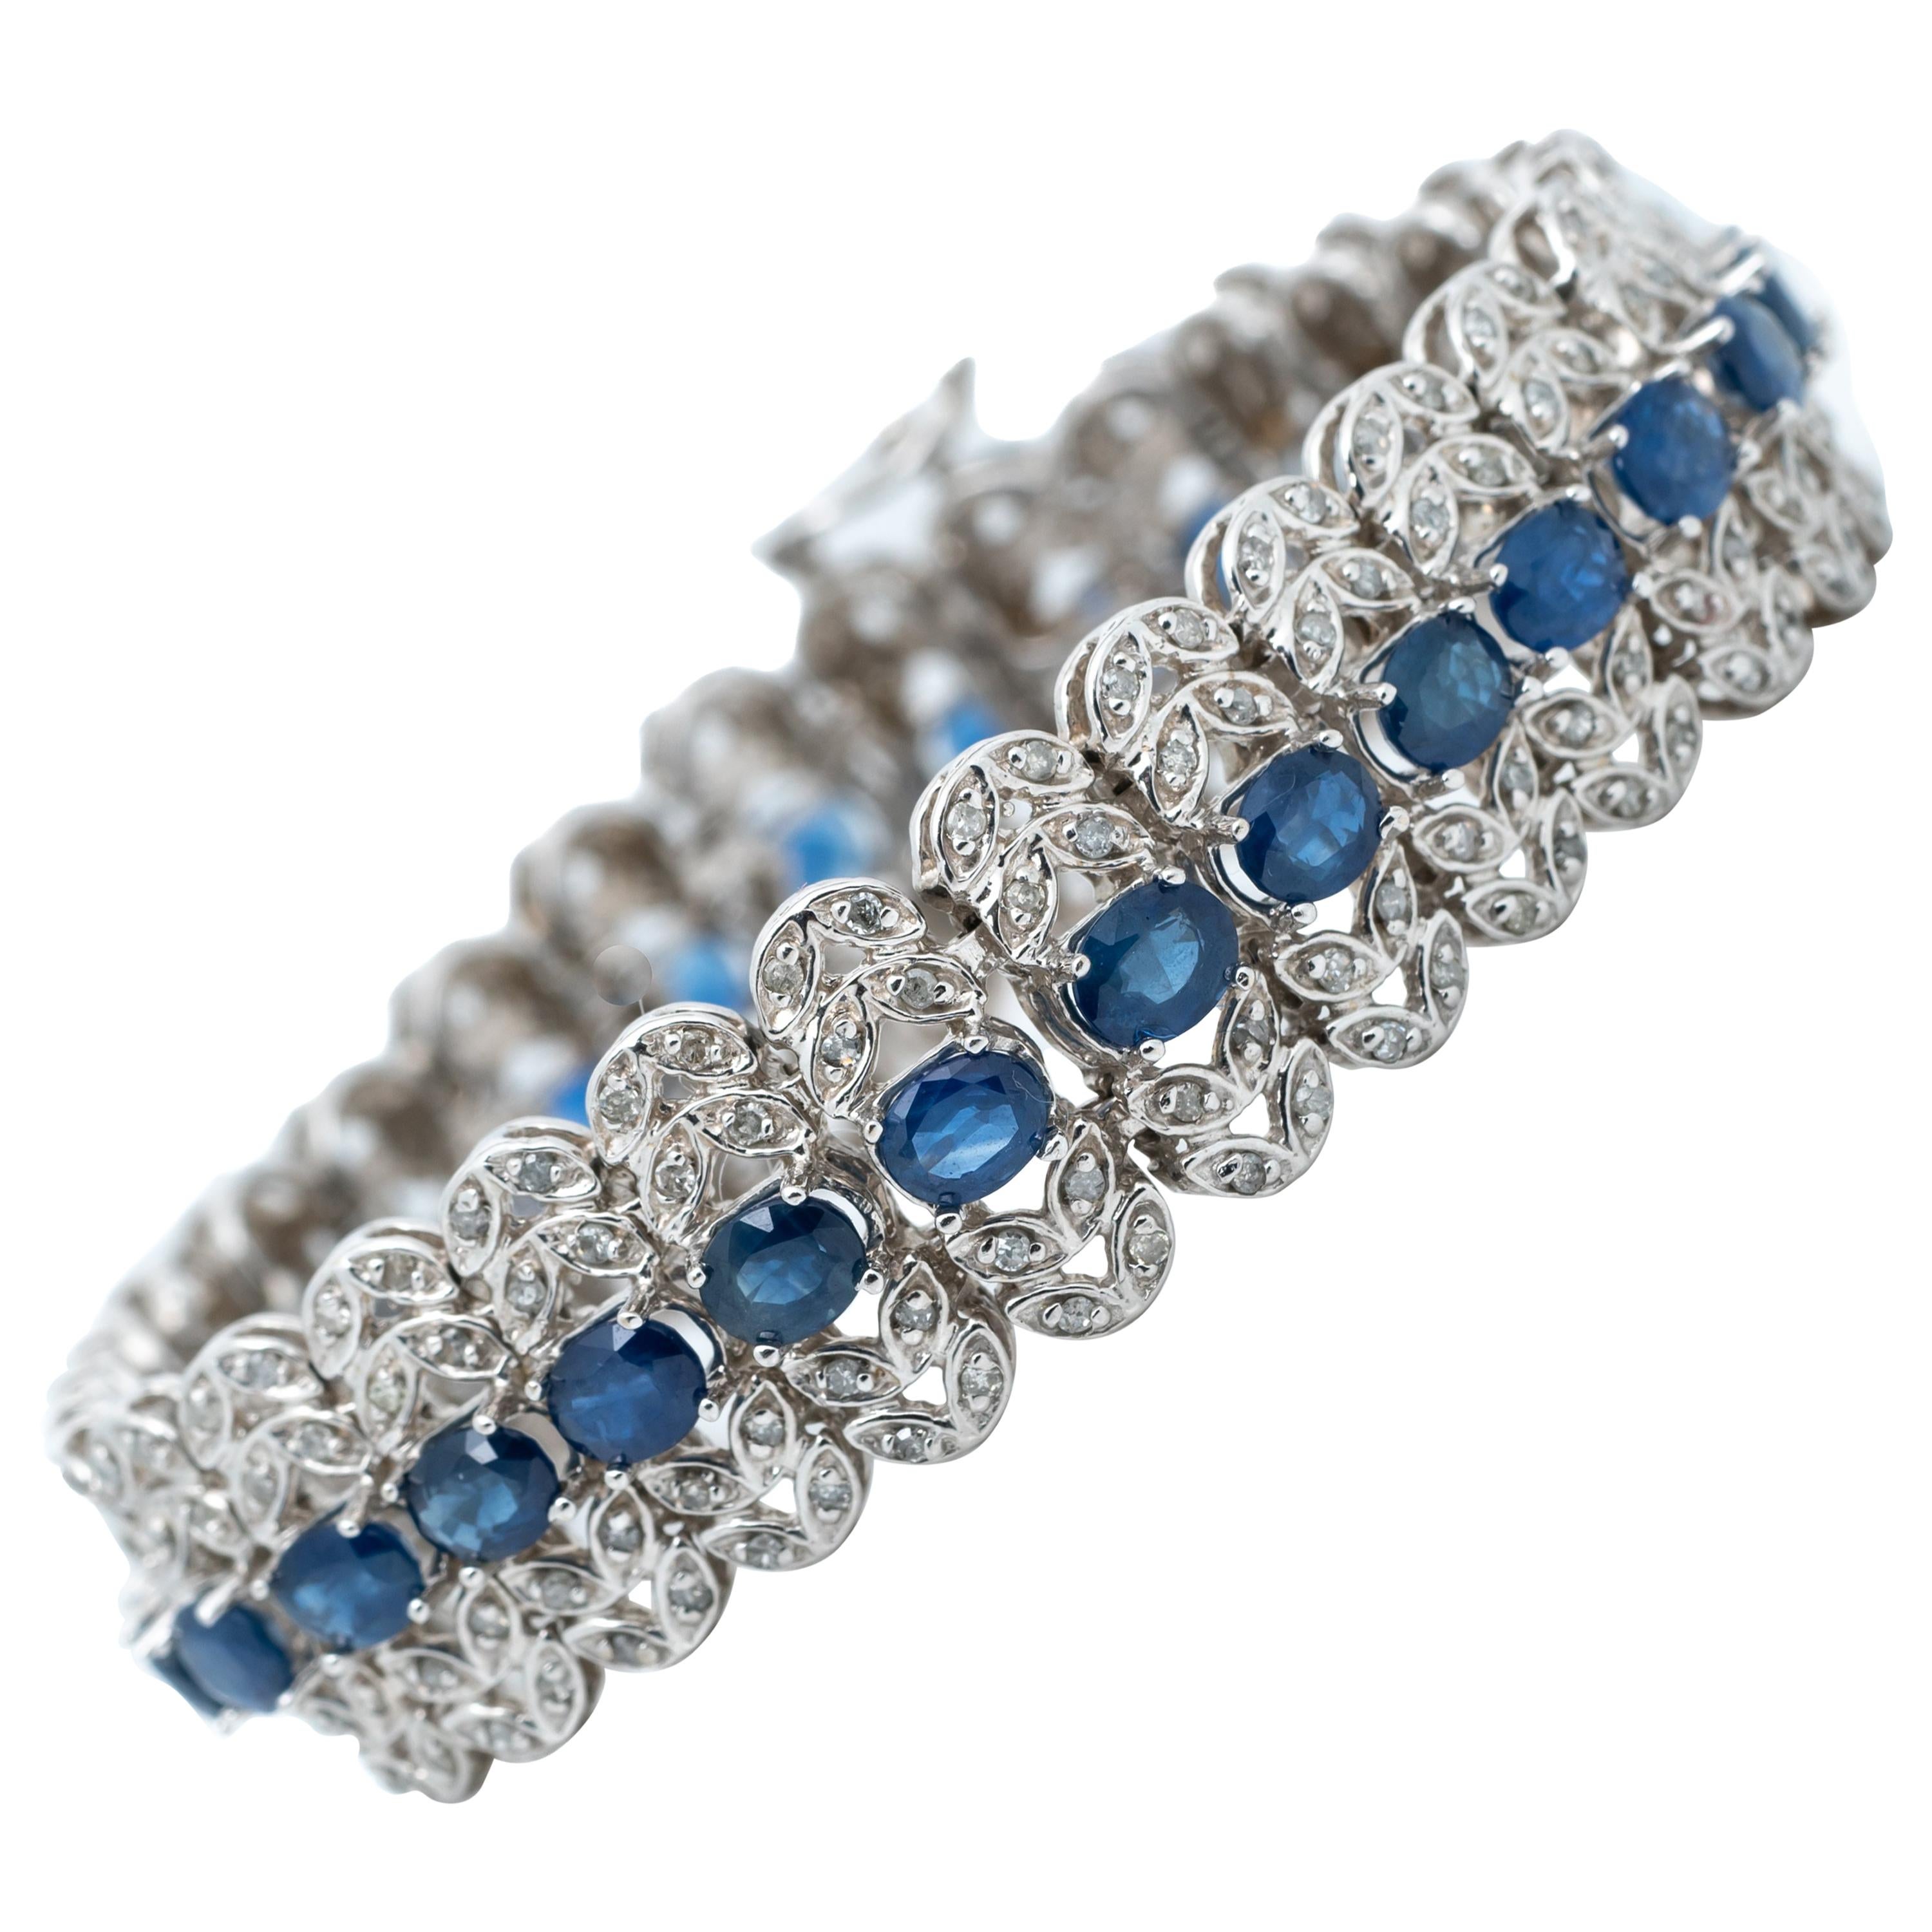 13 Carat Sapphire and 1 Carat Diamond Bracelet in 14 Karat White Gold